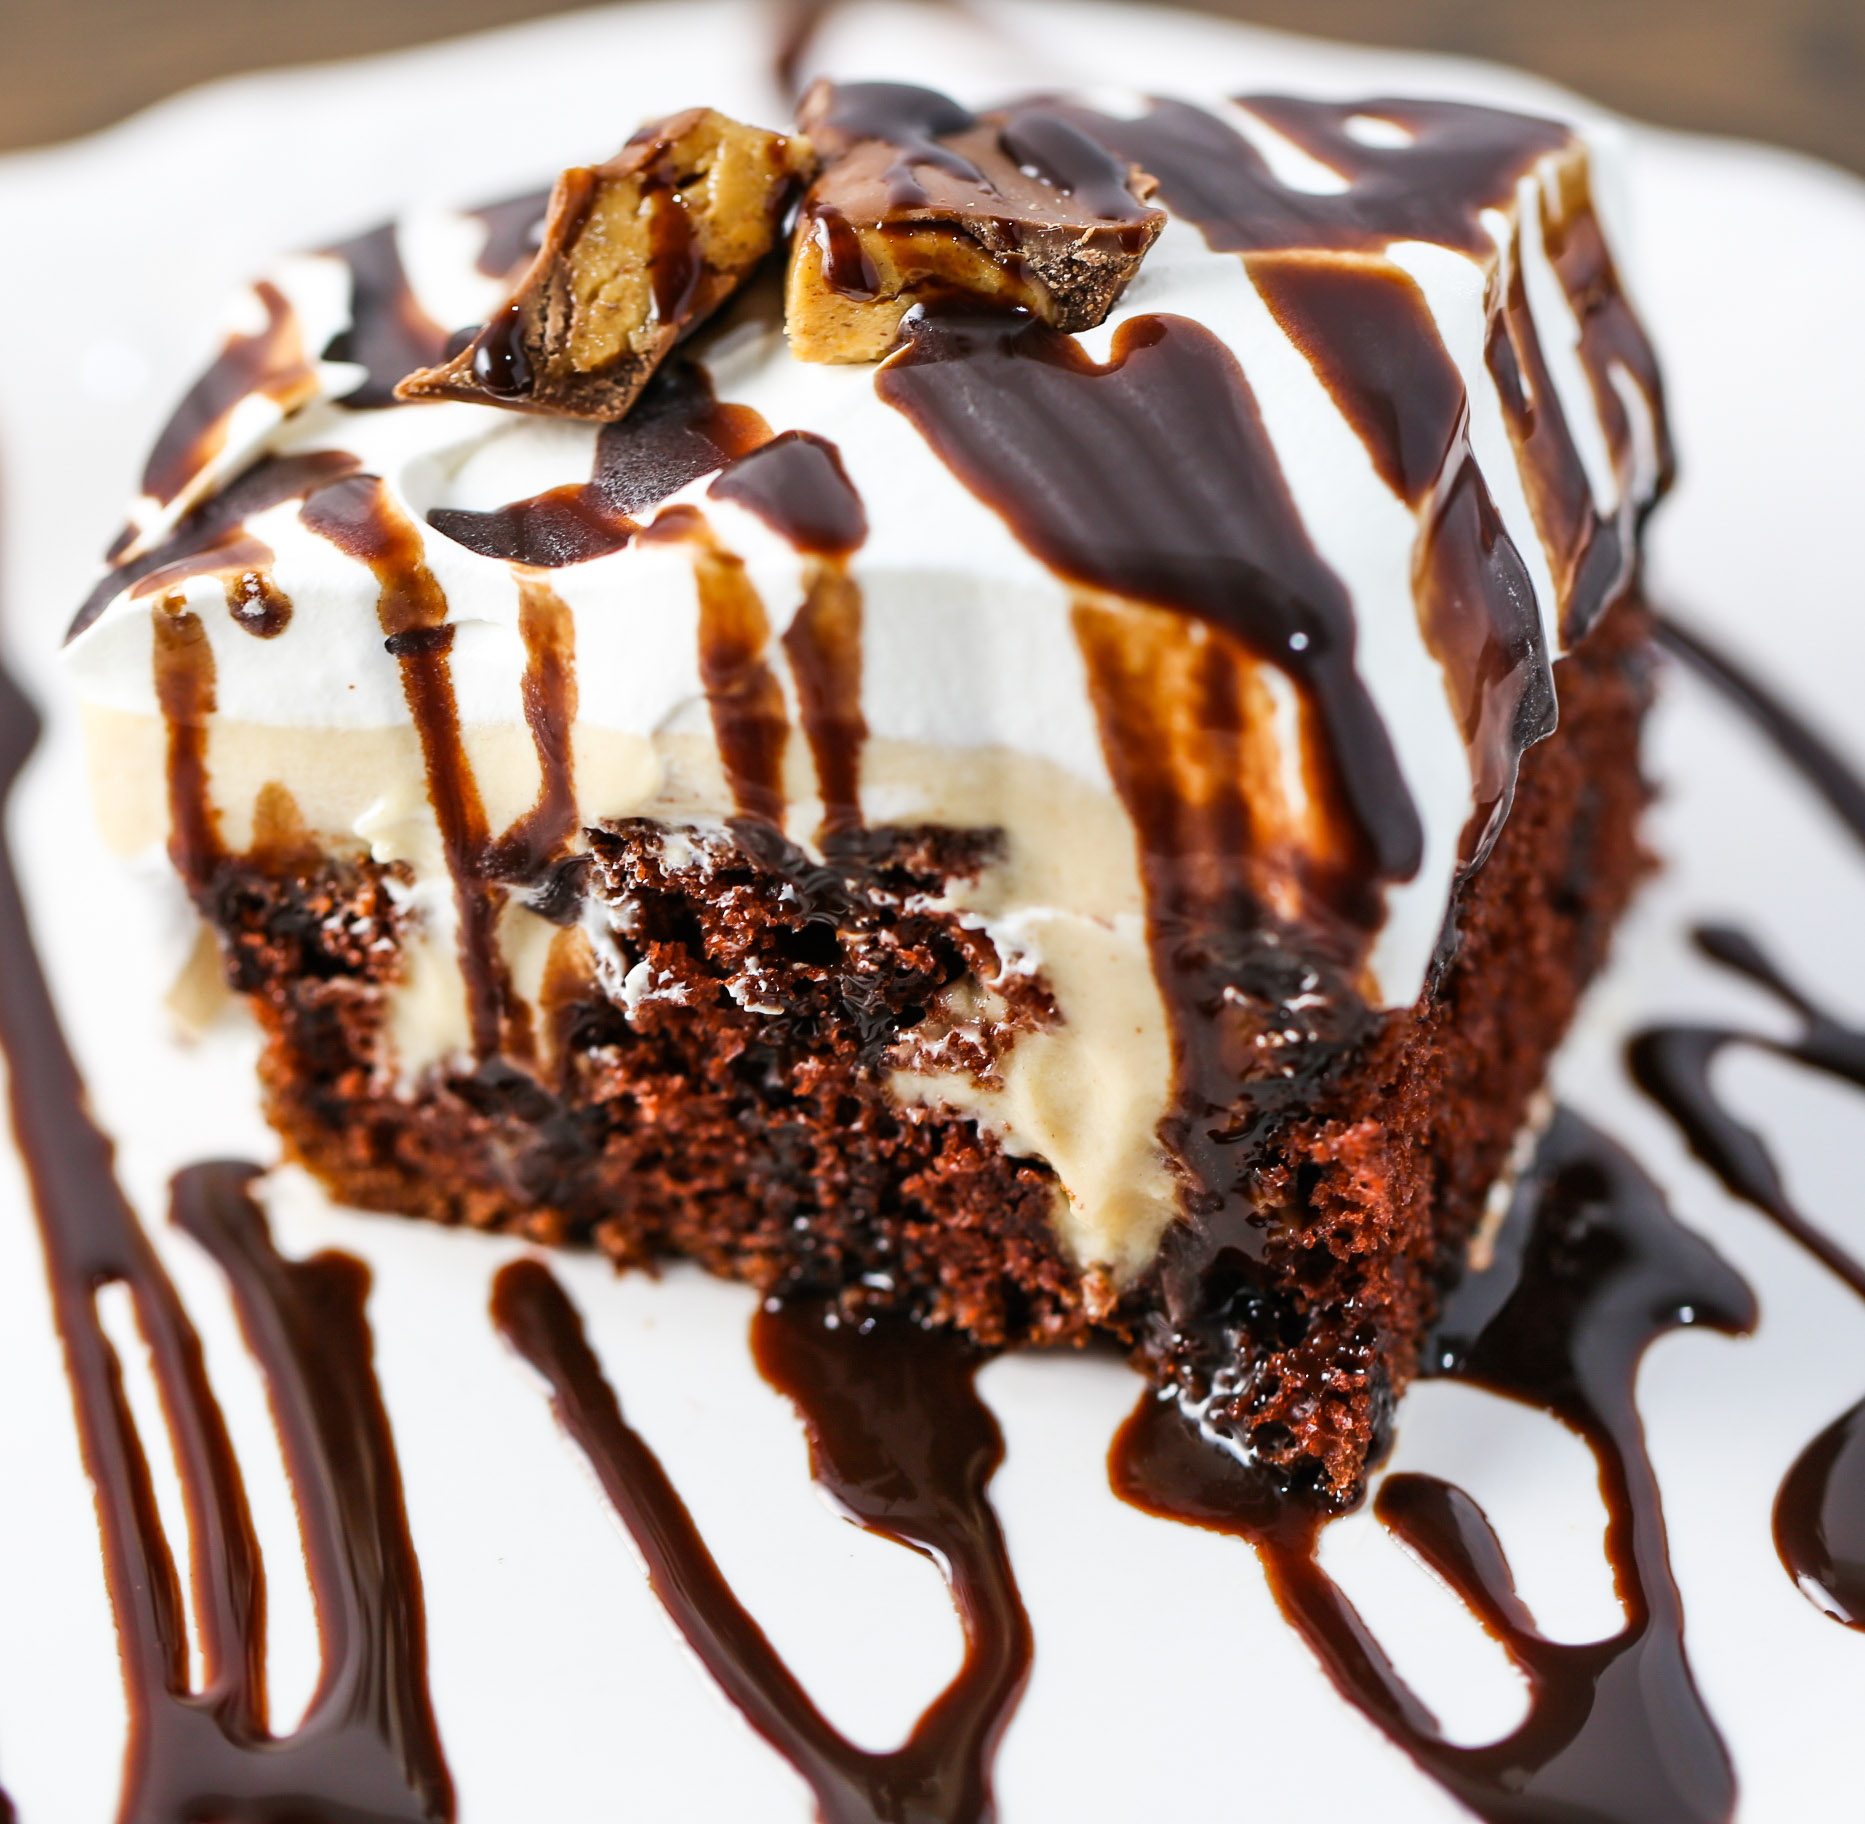 Chocolate Peanut Butter Poke Cake